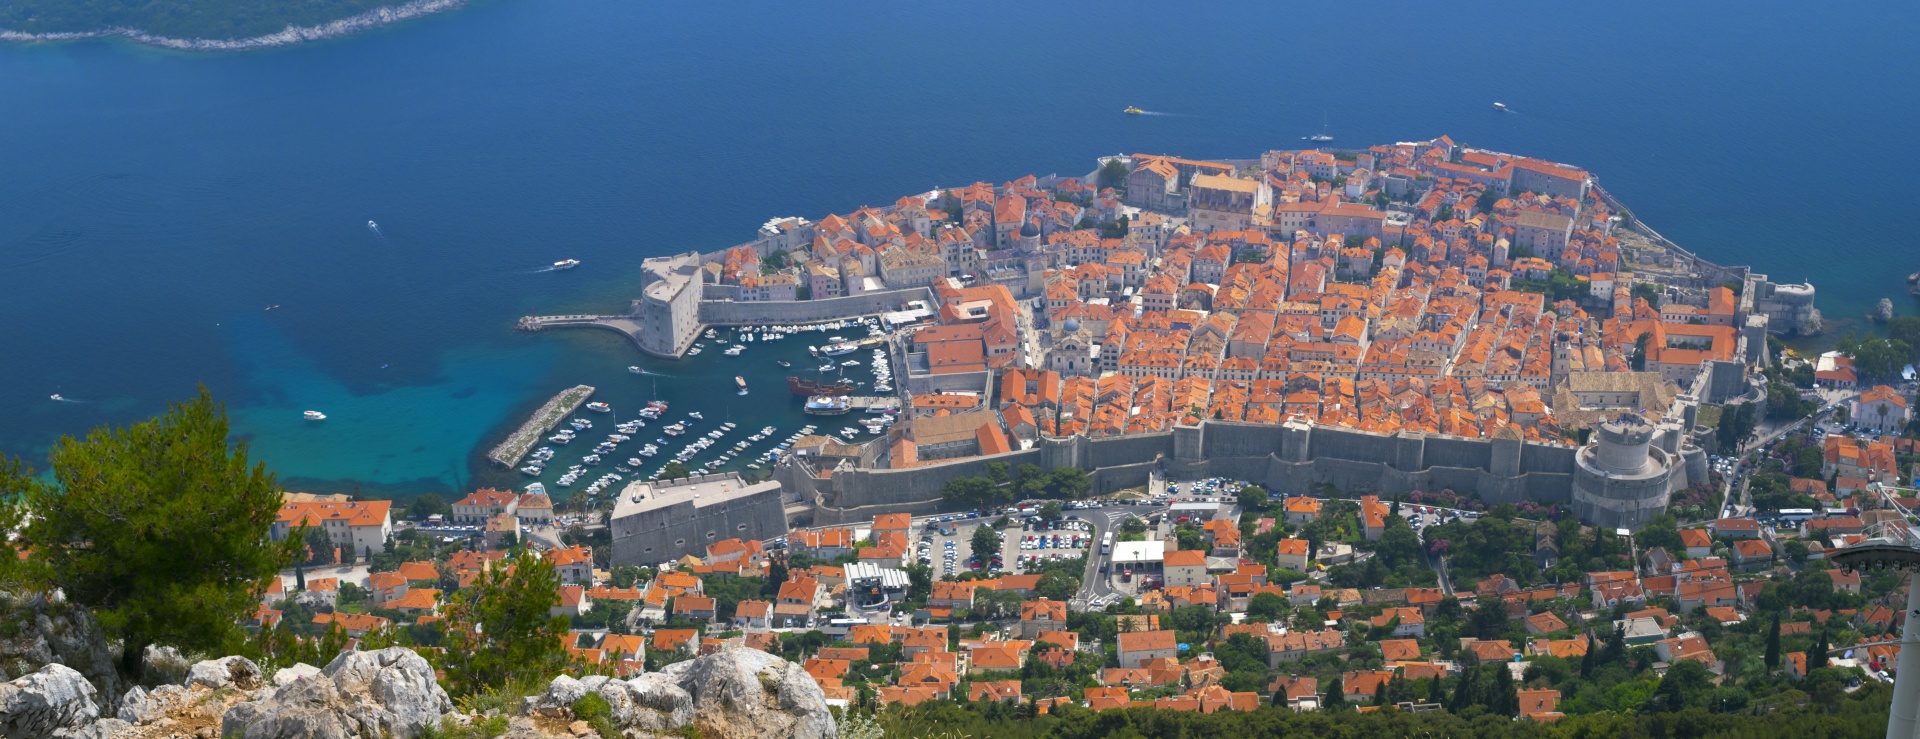 Dubrovnik Image Panorama 198